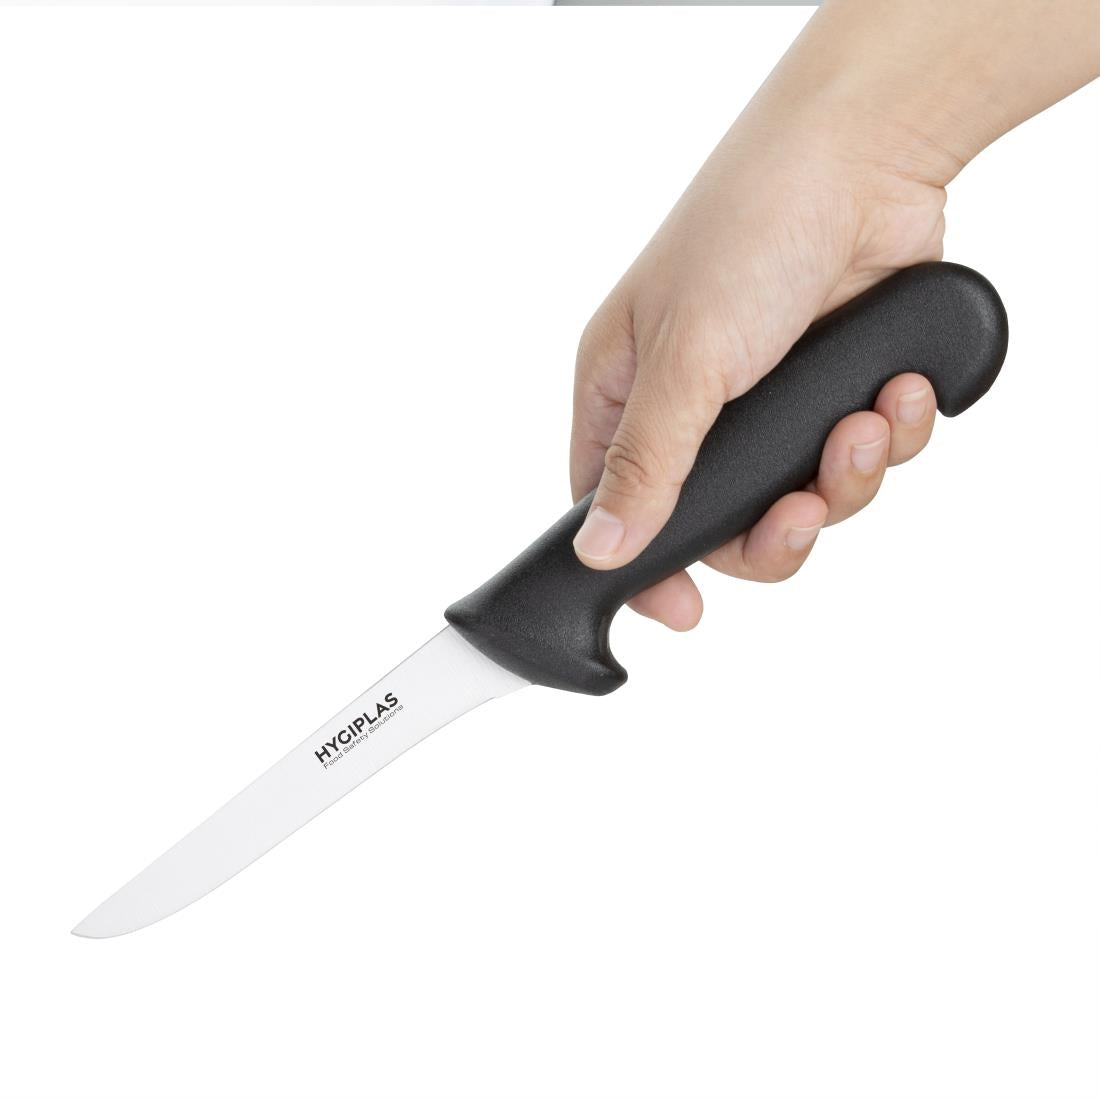 Hygiplas Boning Knife 12.5cm JD Catering Equipment Solutions Ltd